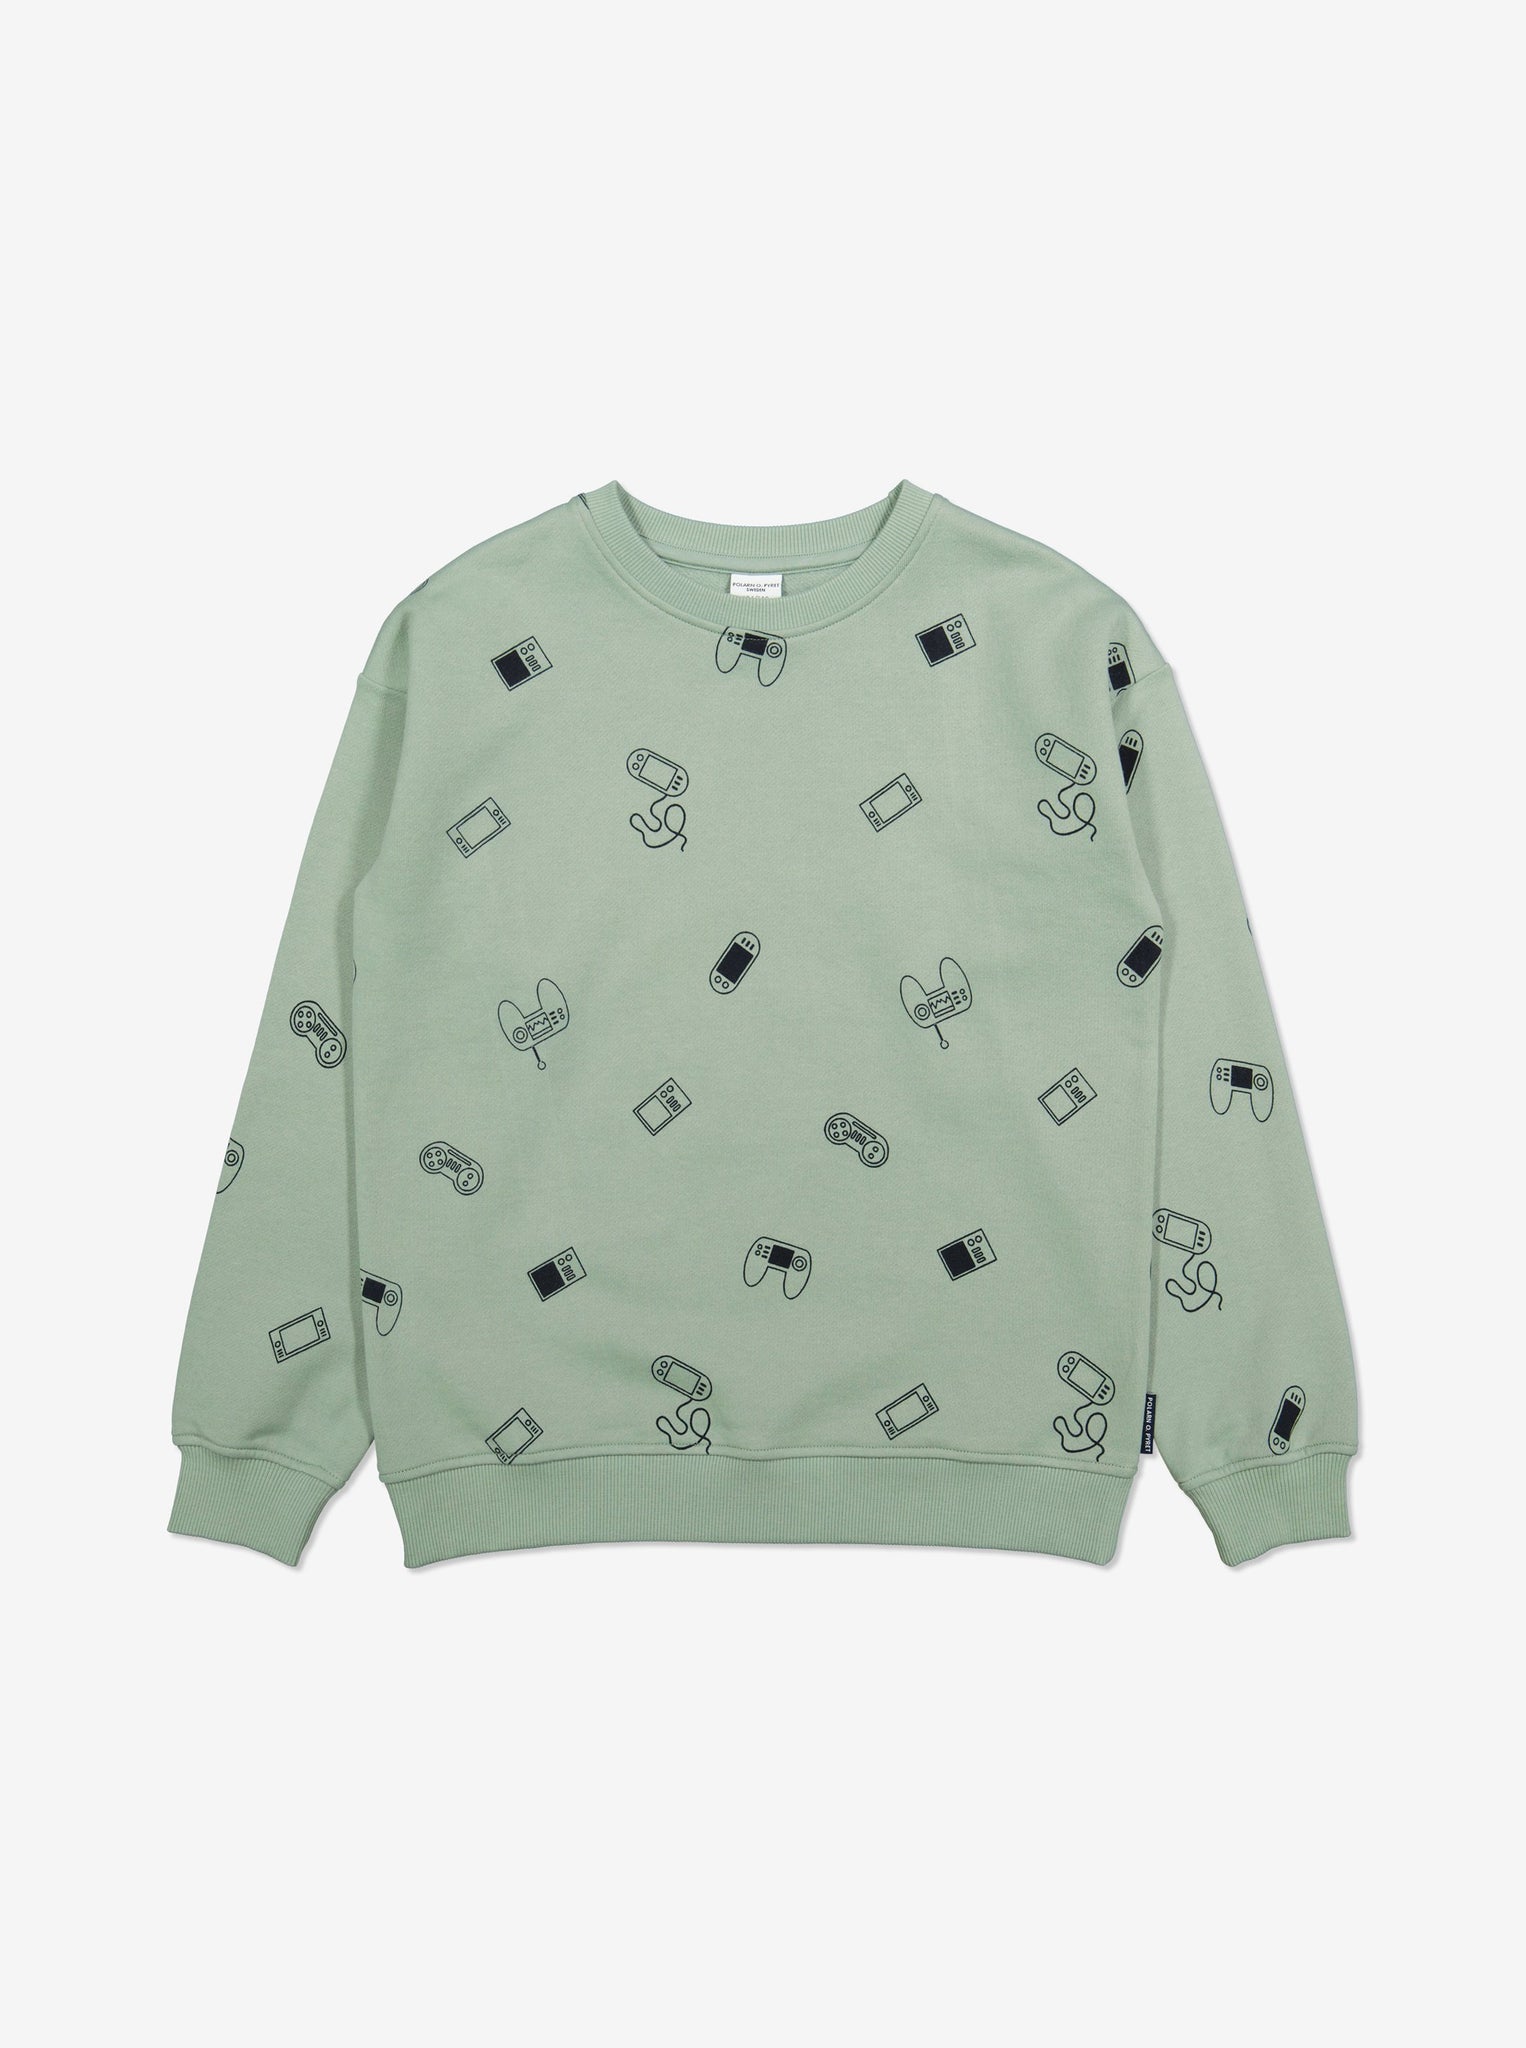  Organic Green Kids Sweatshirt from Polarn O. Pyret Kidswear. Made with 100% organic cotton.